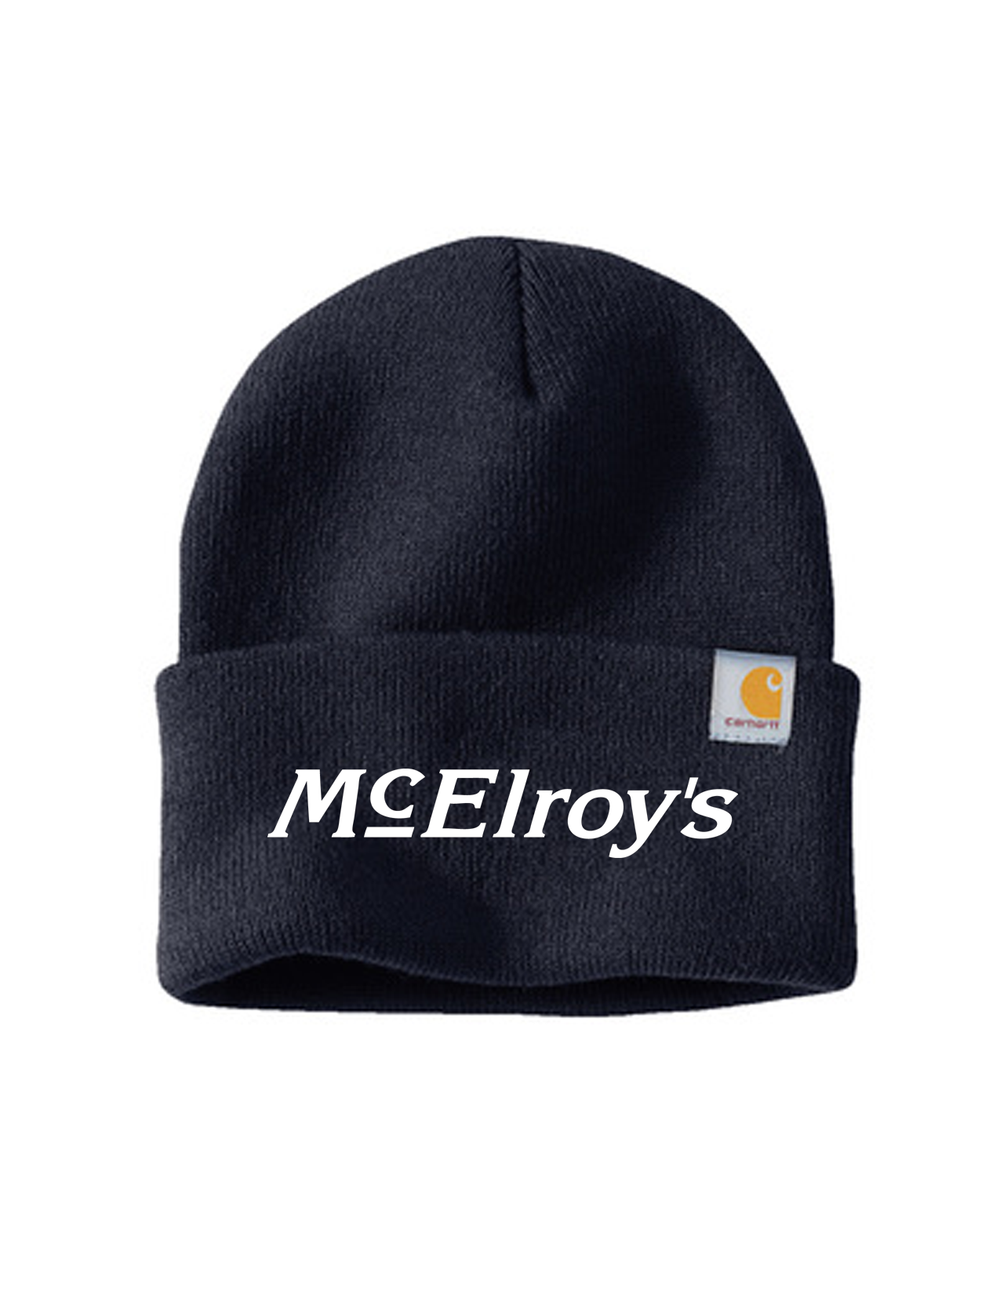 McElroy's, Inc. - Carhartt Watch Cap 2.0 - CT104597